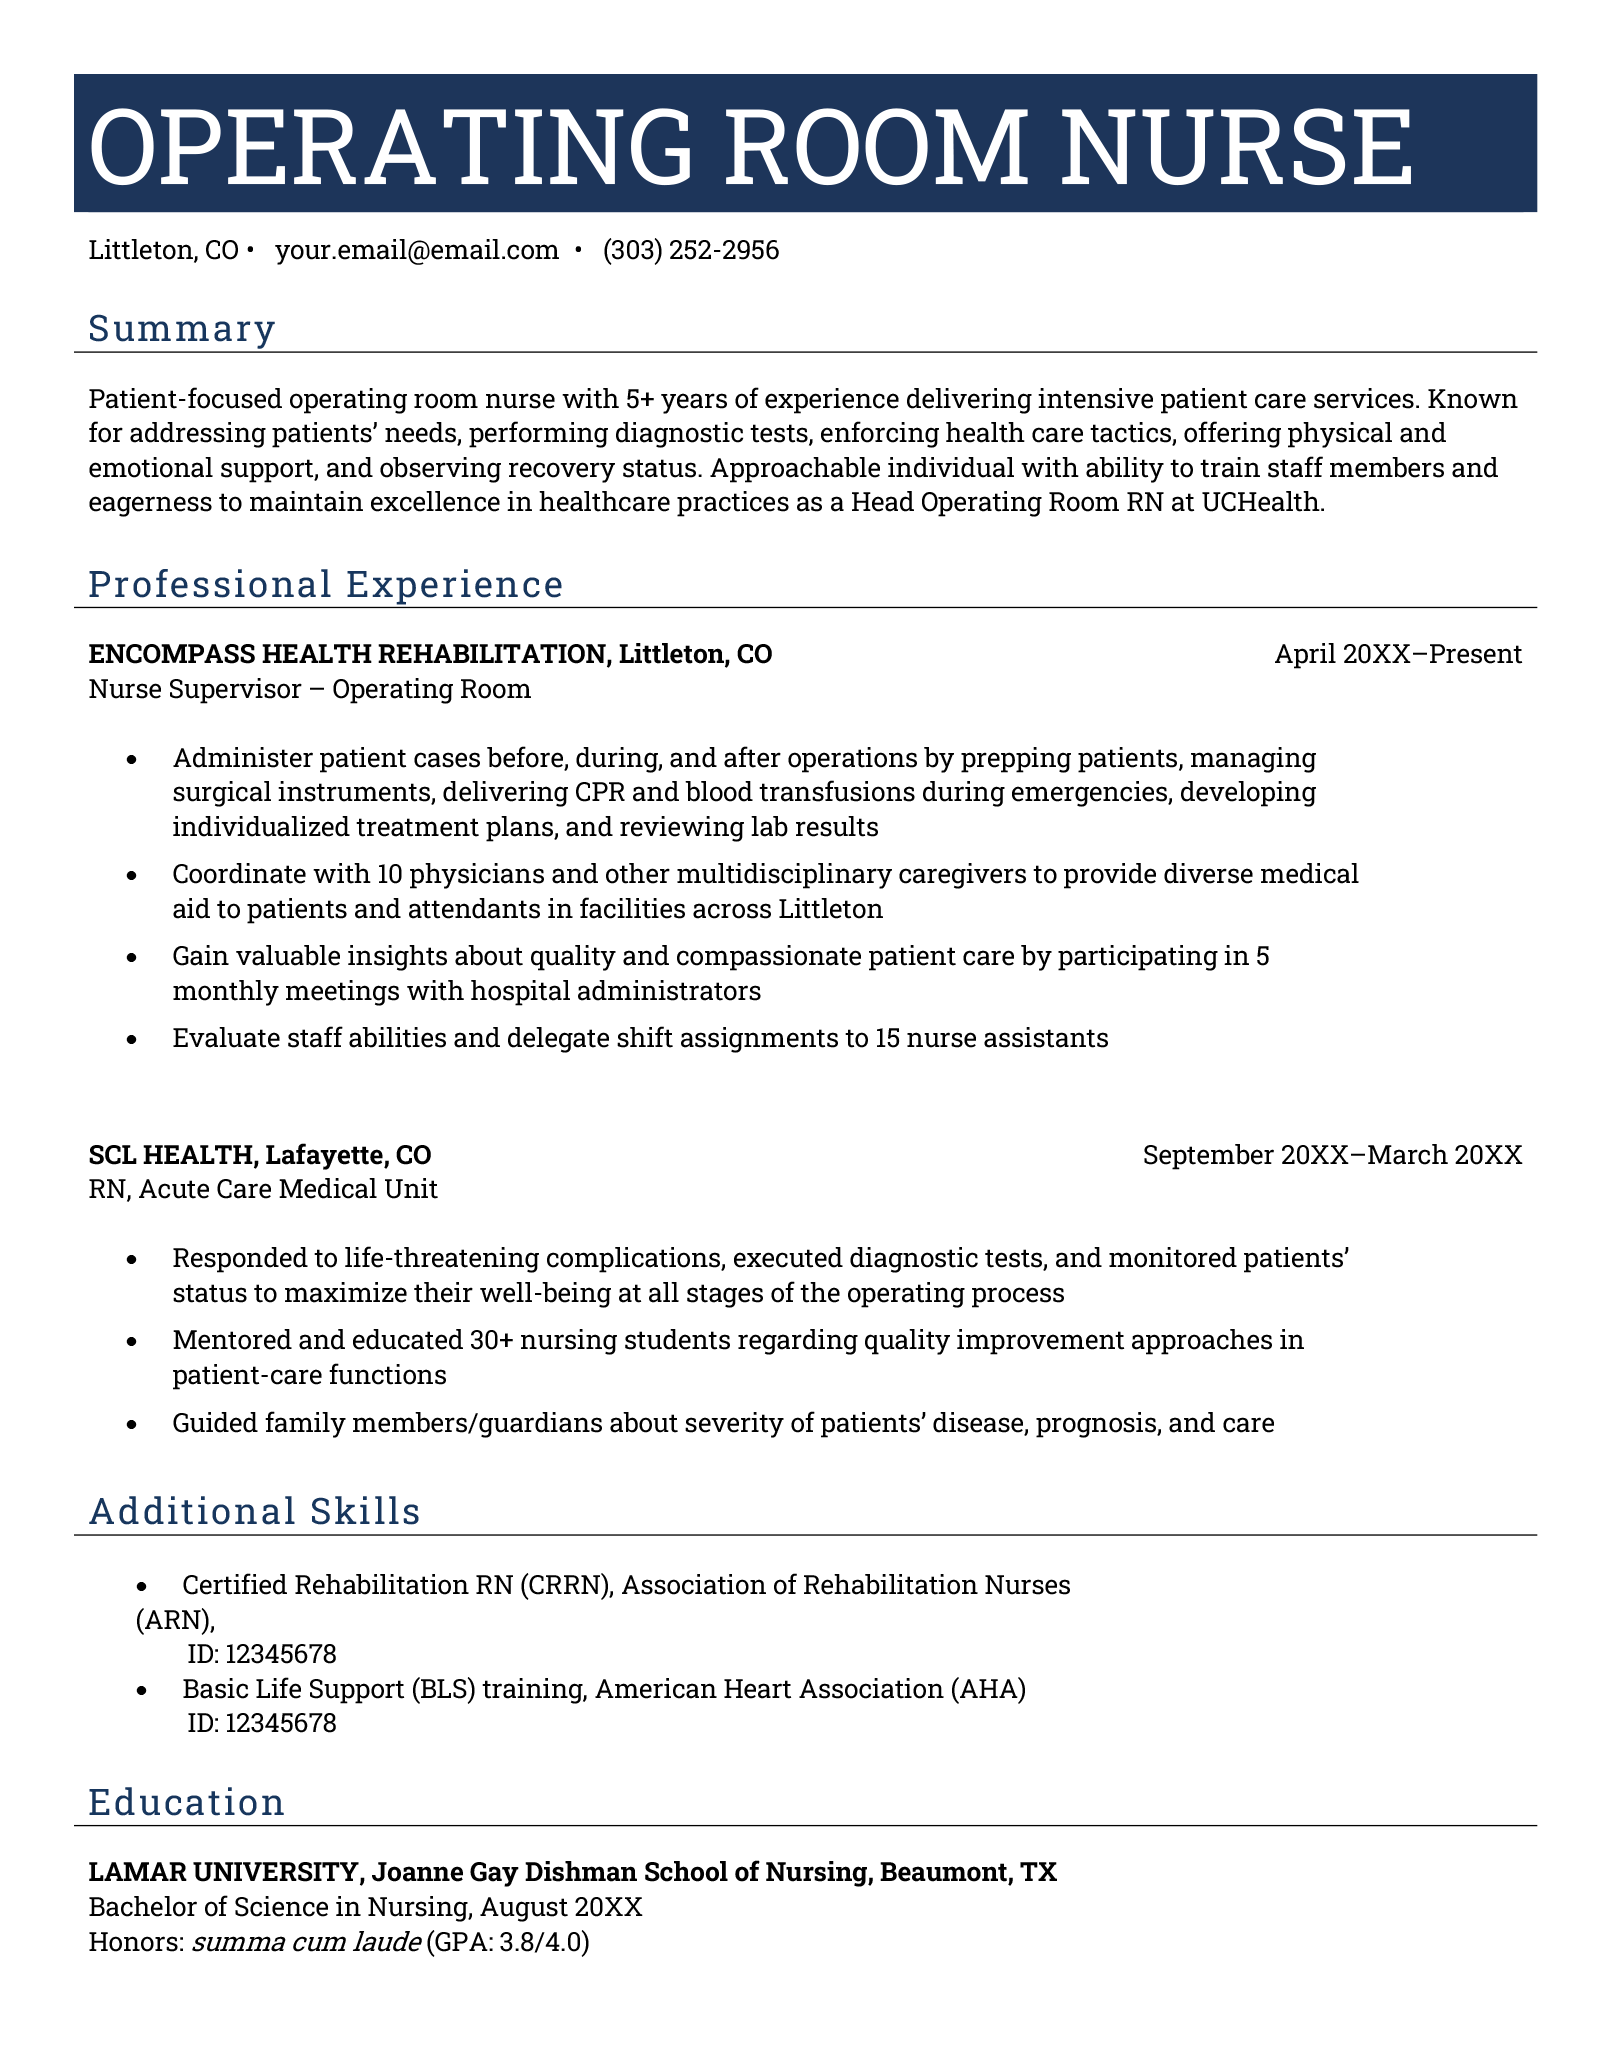 Operating room nurse resume example with dark blue header